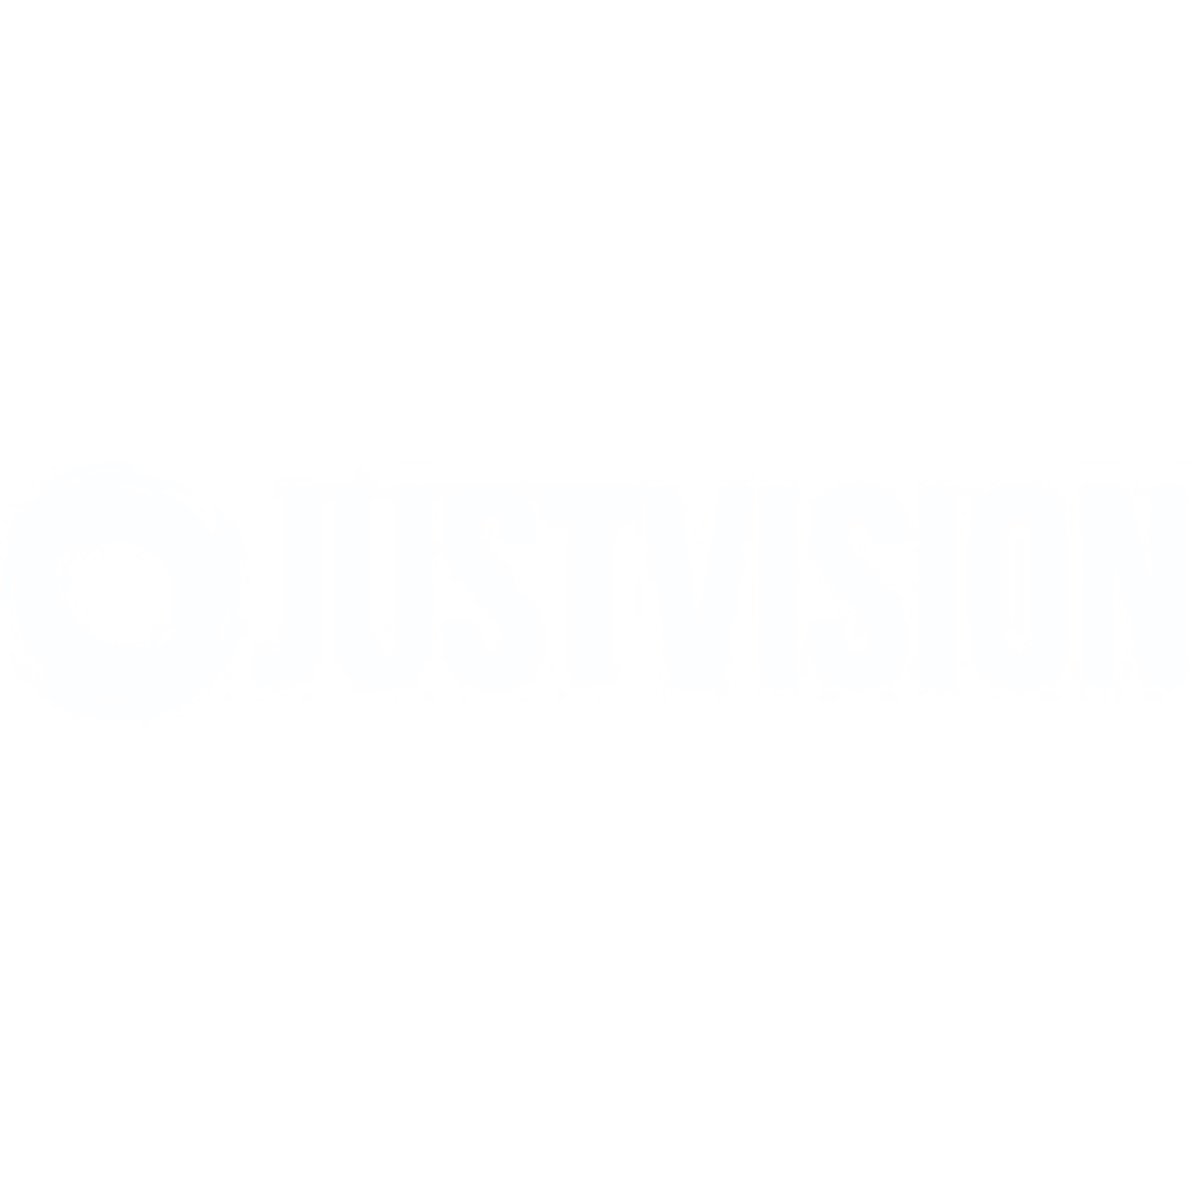 JustVision